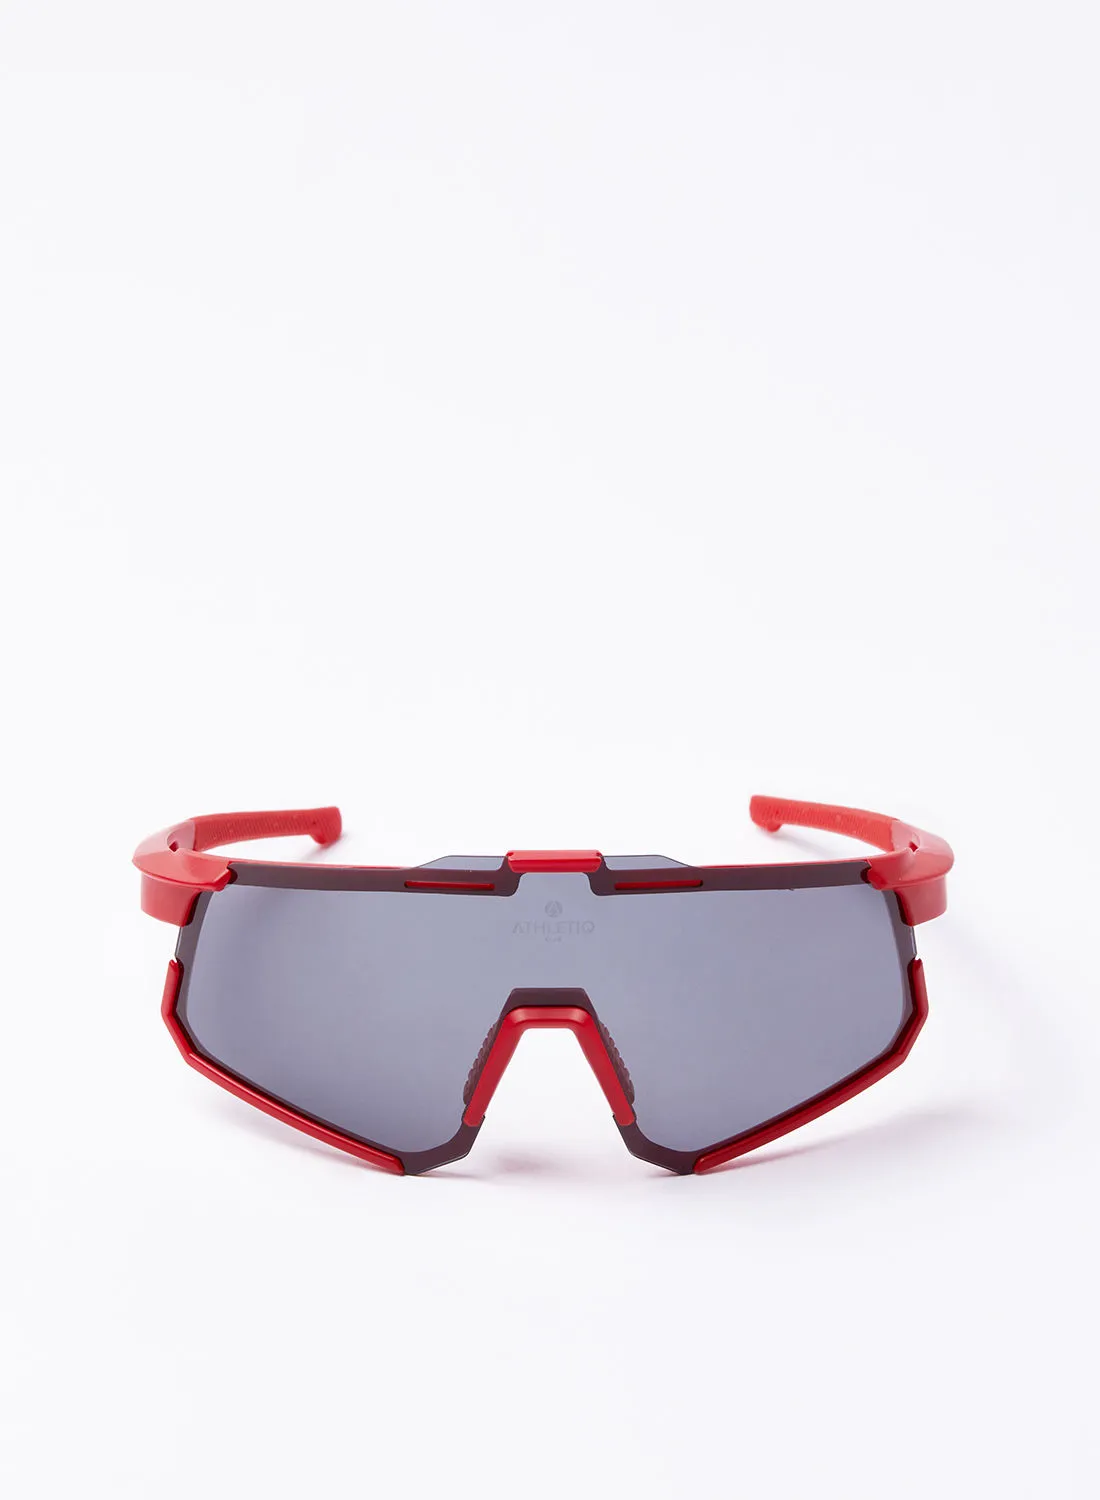 Athletiq Cycling Scooter Sunglasses - Athletiq Club Jabal Sawda - Red Frame With Smoke Black Multilayer Lens